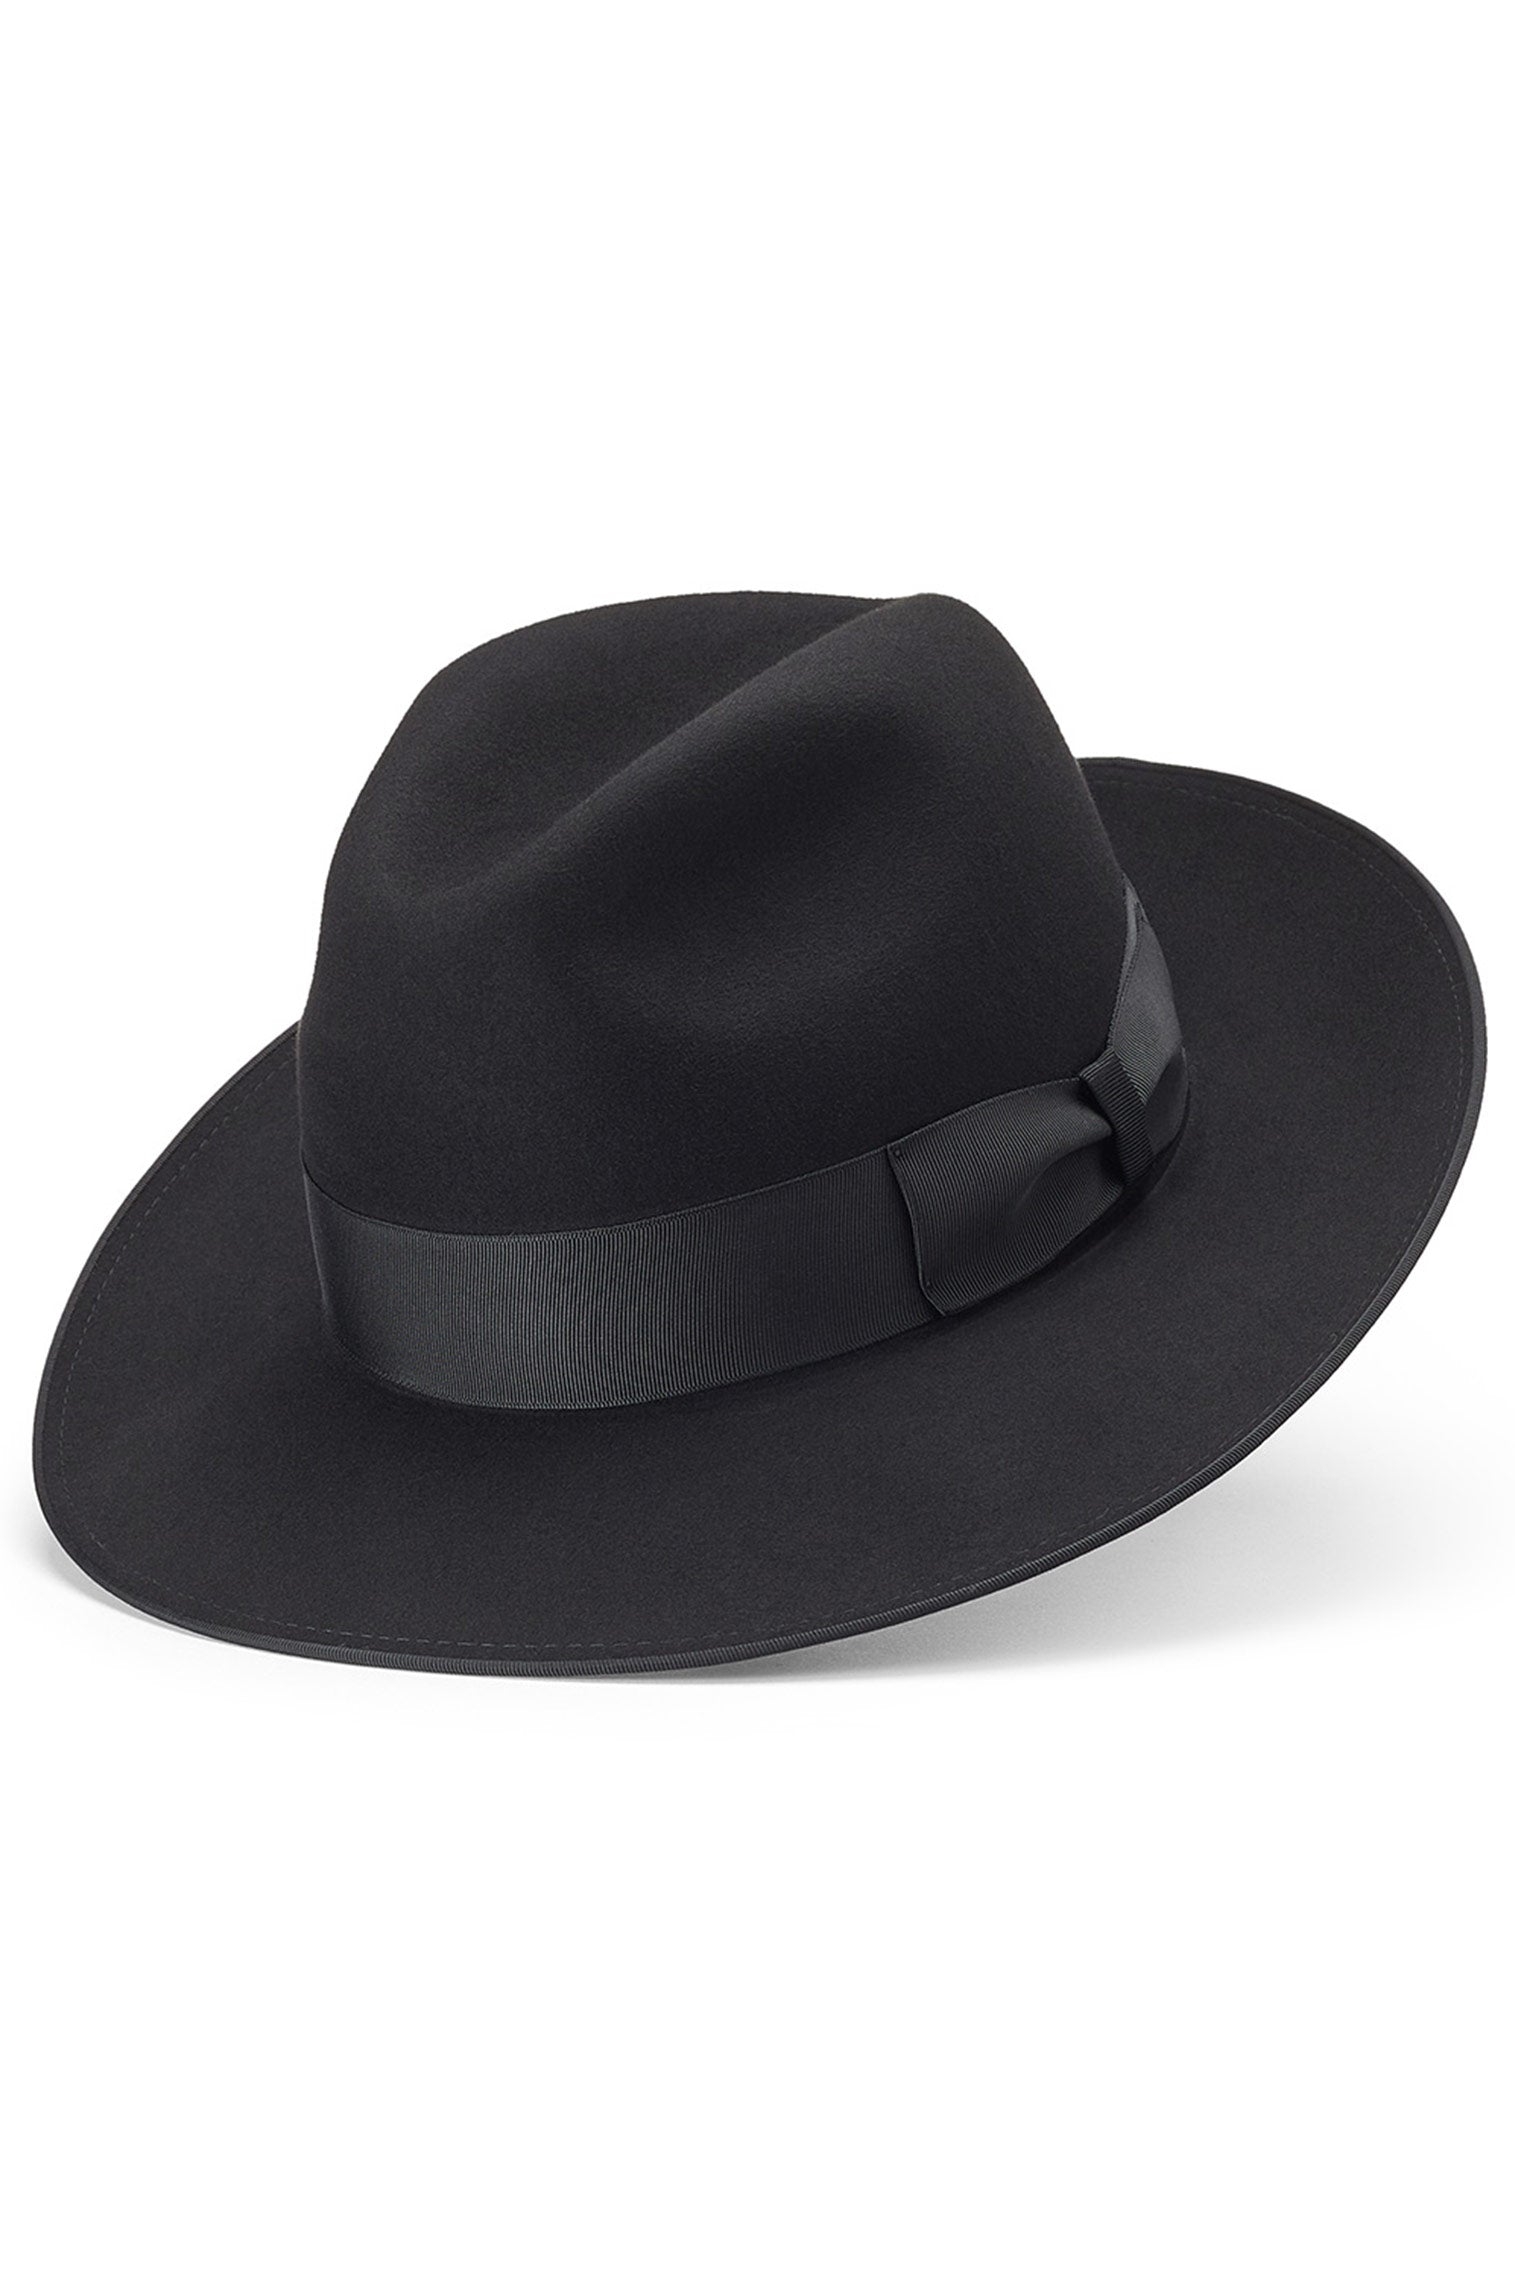 St James's Black Fedora - Best Selling Hats - Lock & Co. Hatters London UK